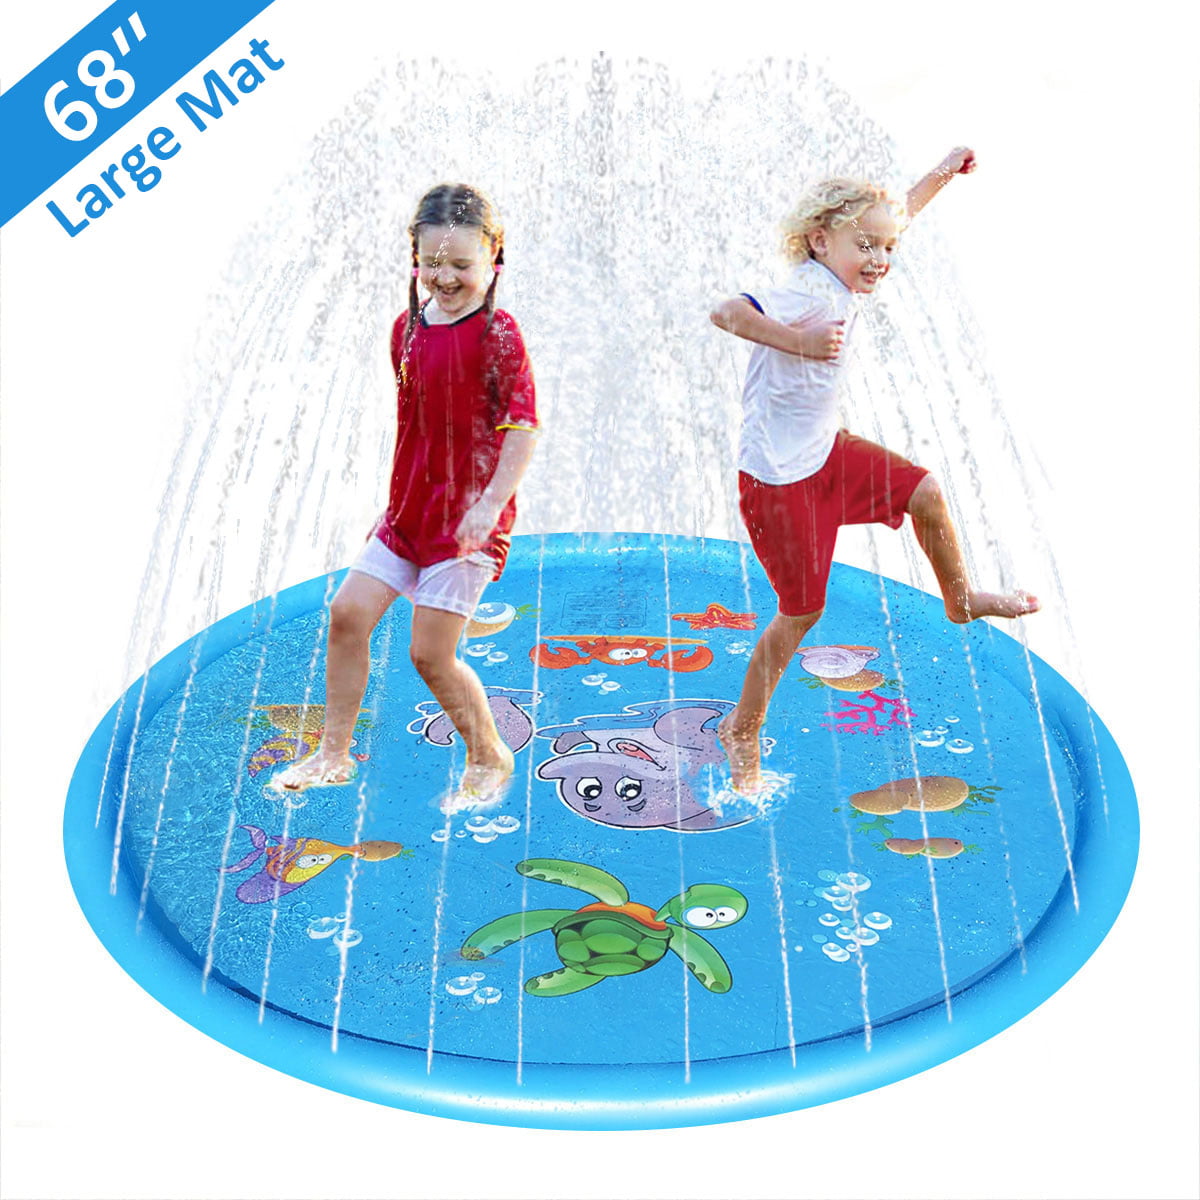 68, Digital 68 Splash Play Mat Digital and Animals Outdoor Plastic Wading Fun Pool for Boys Girls Learning STFLY Sprinkler Splash Pad for Kids